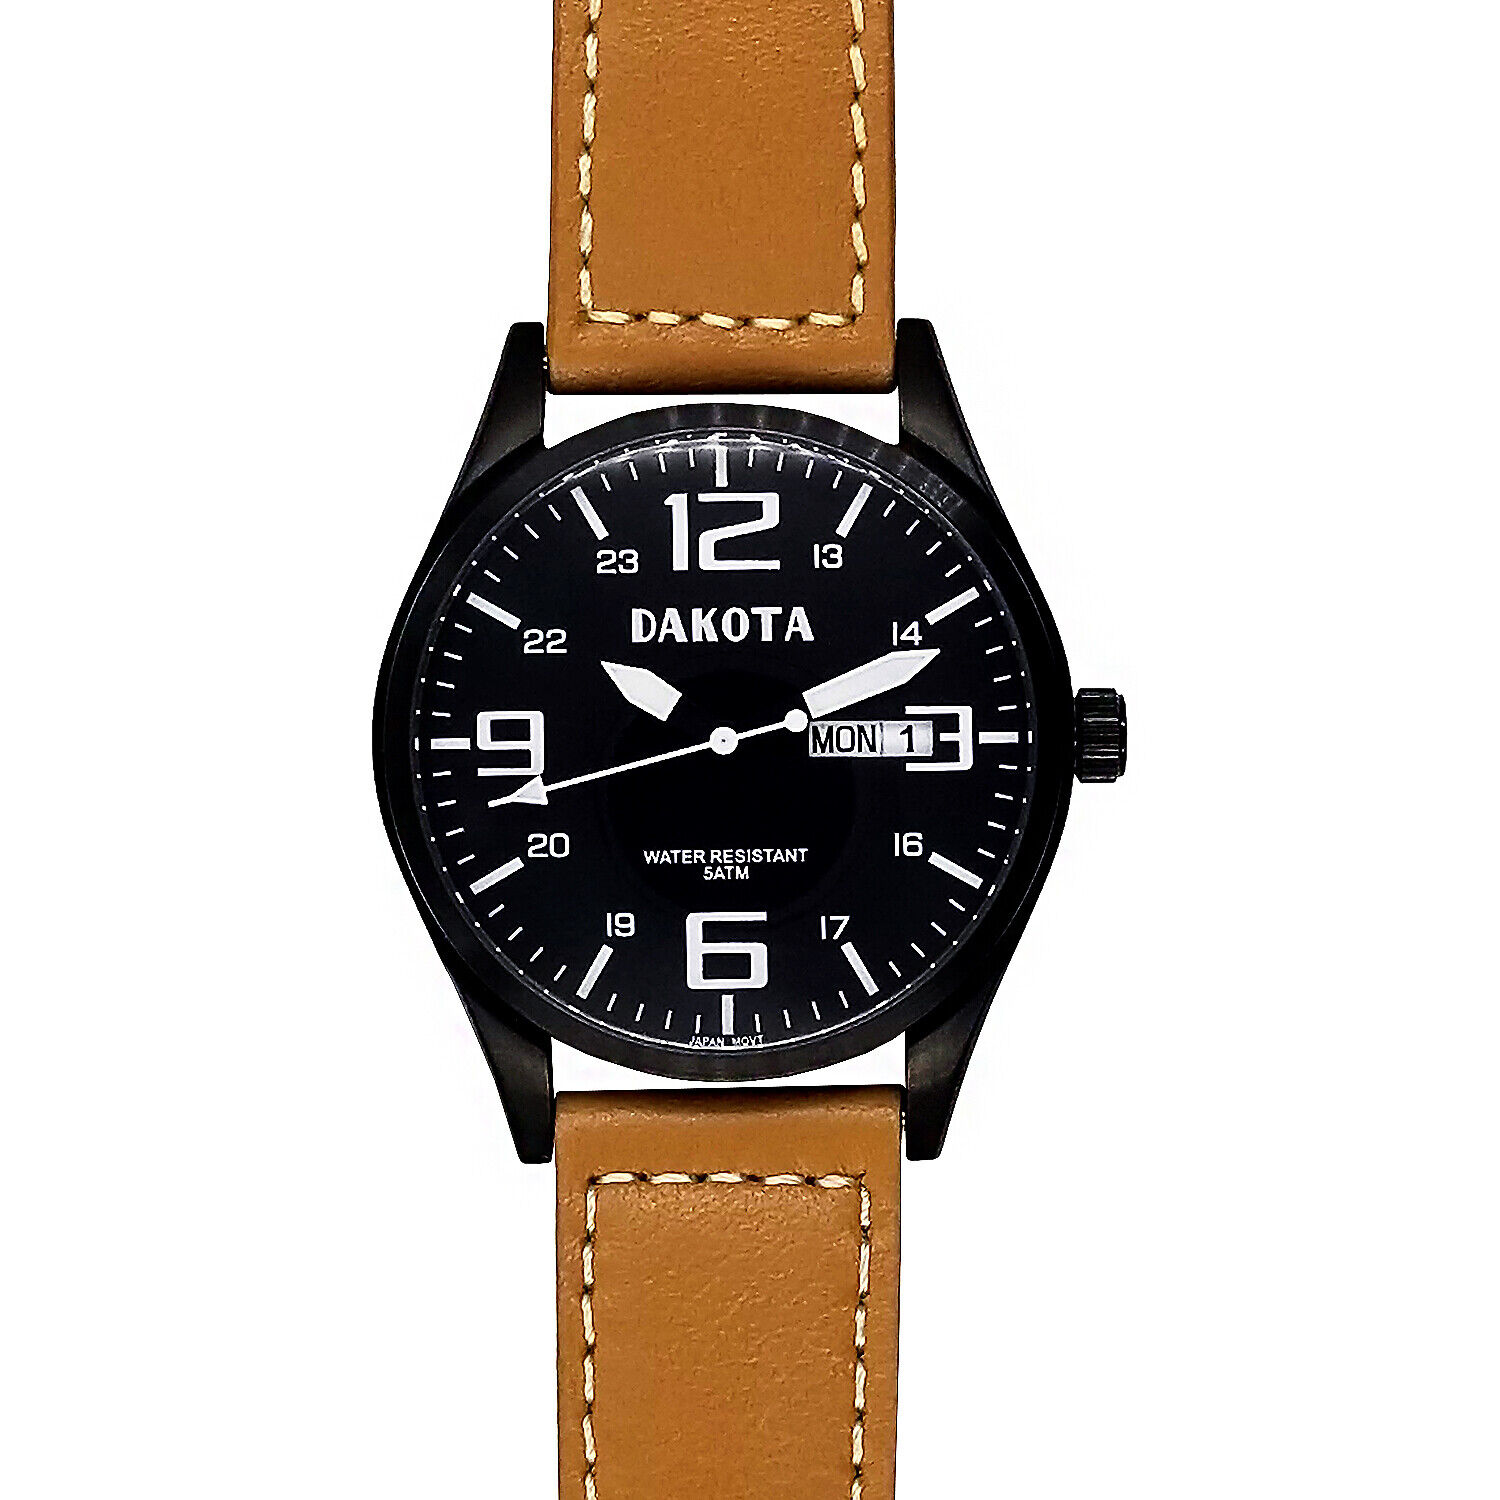 Dakota Men's Casual Angler Wrist Watch, Black Dial/Case, Tan Leather Band, 40370